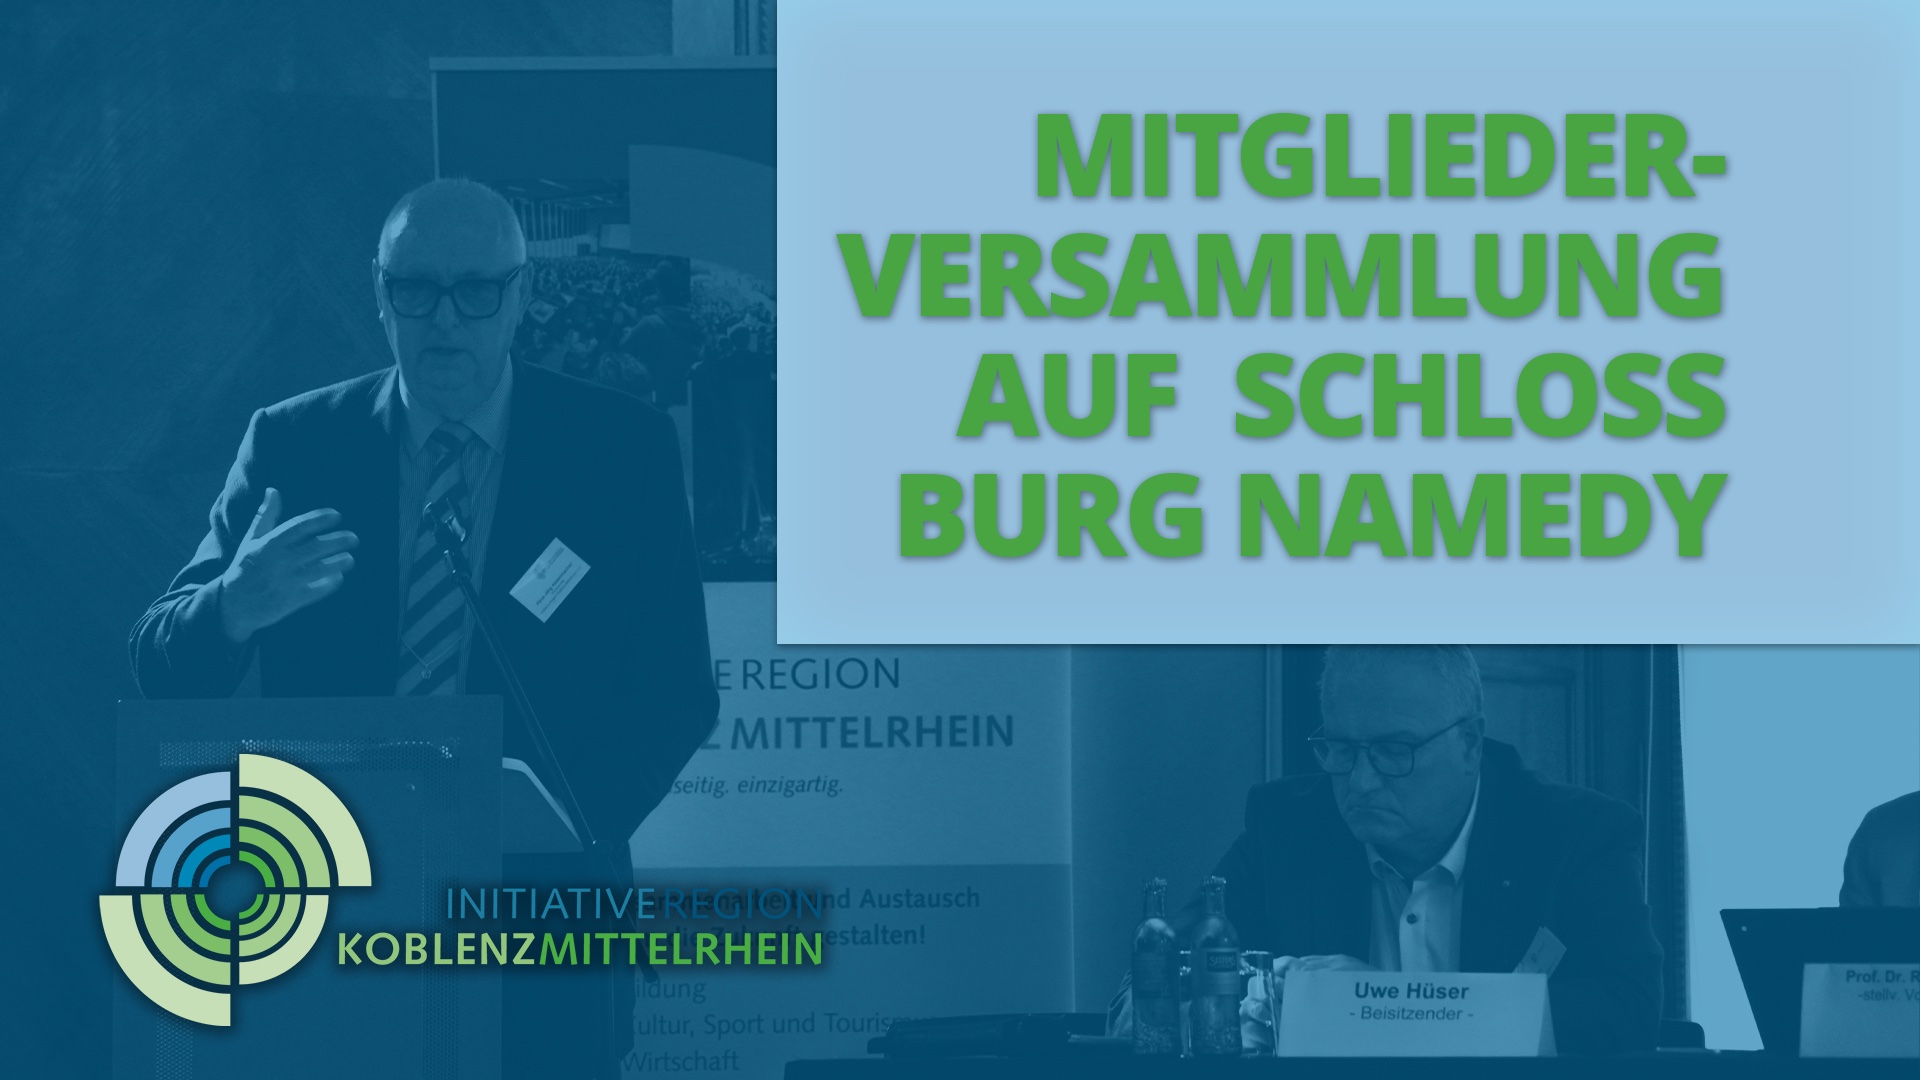 Initiative Region Koblenz-Mittelrhein e.V. - Mitgliederversammlung auf Burg Namedy